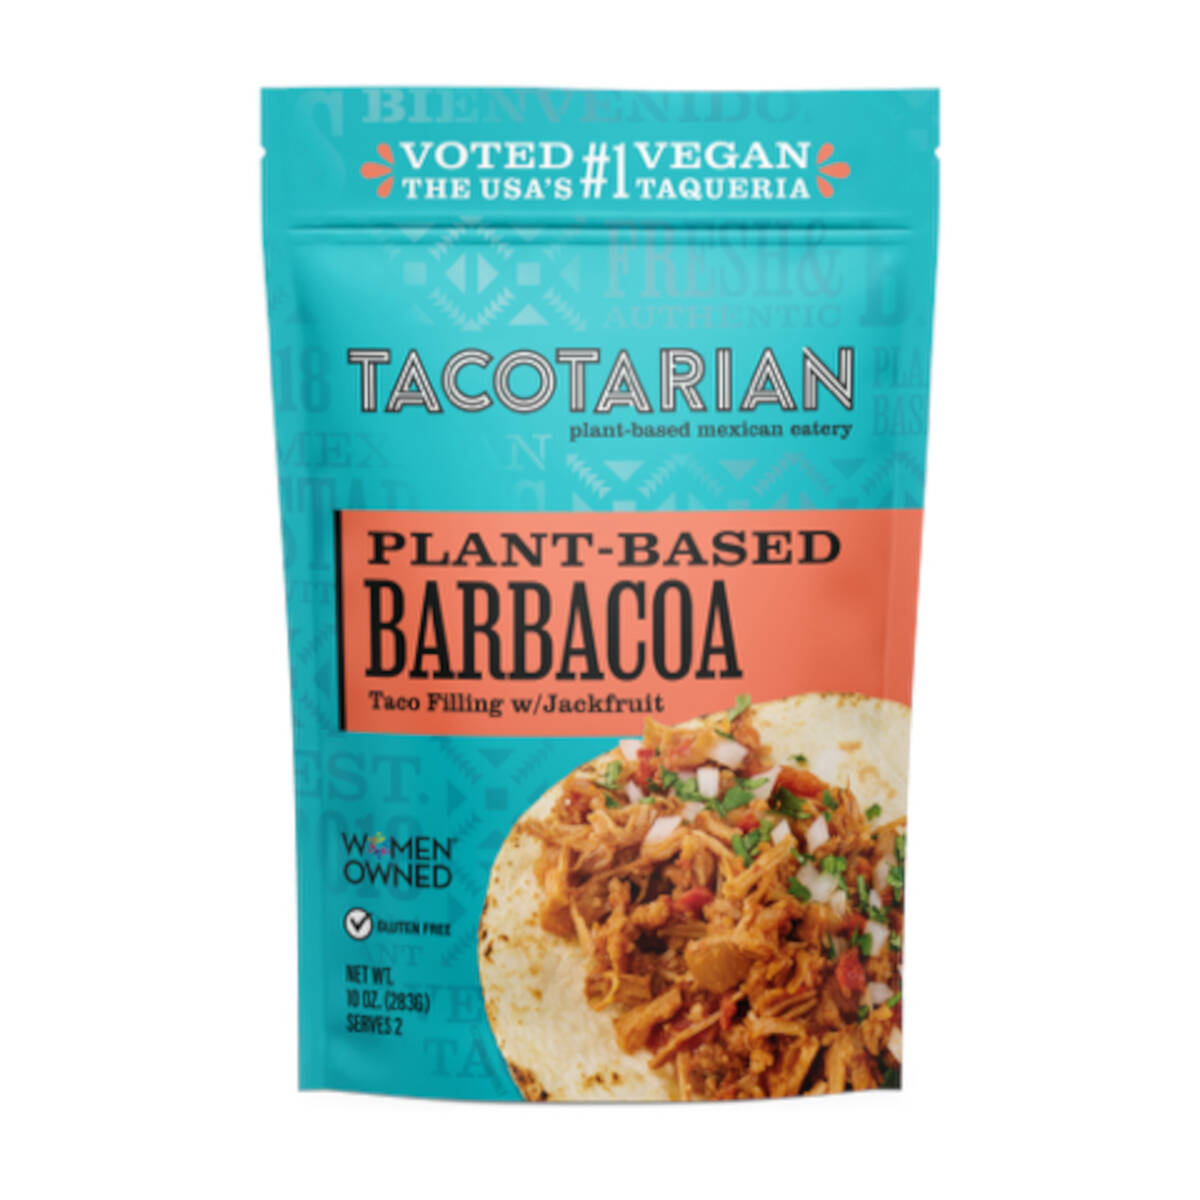 Plant-based barbacoa taco filling from Tacotarian, the popular vegan taqueria with four locatio ...